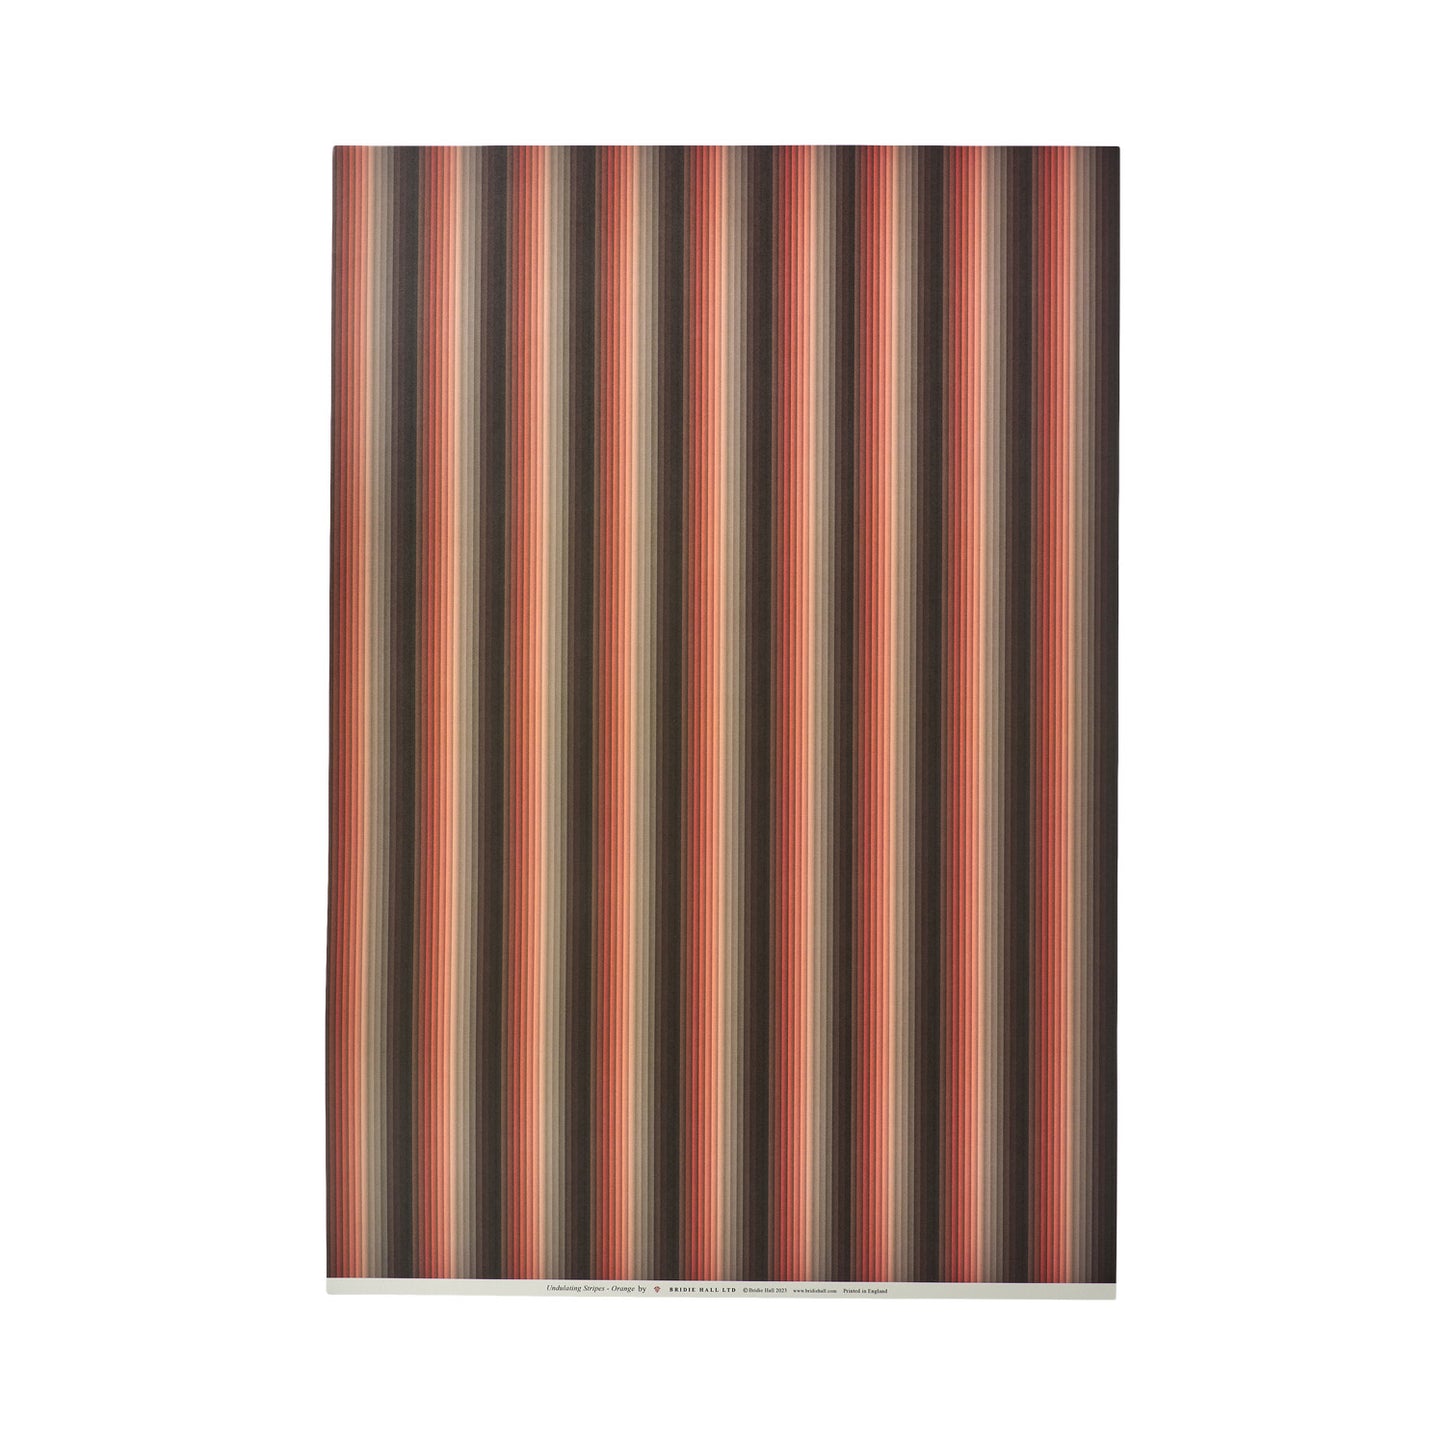 Undulating Stripes - Orange